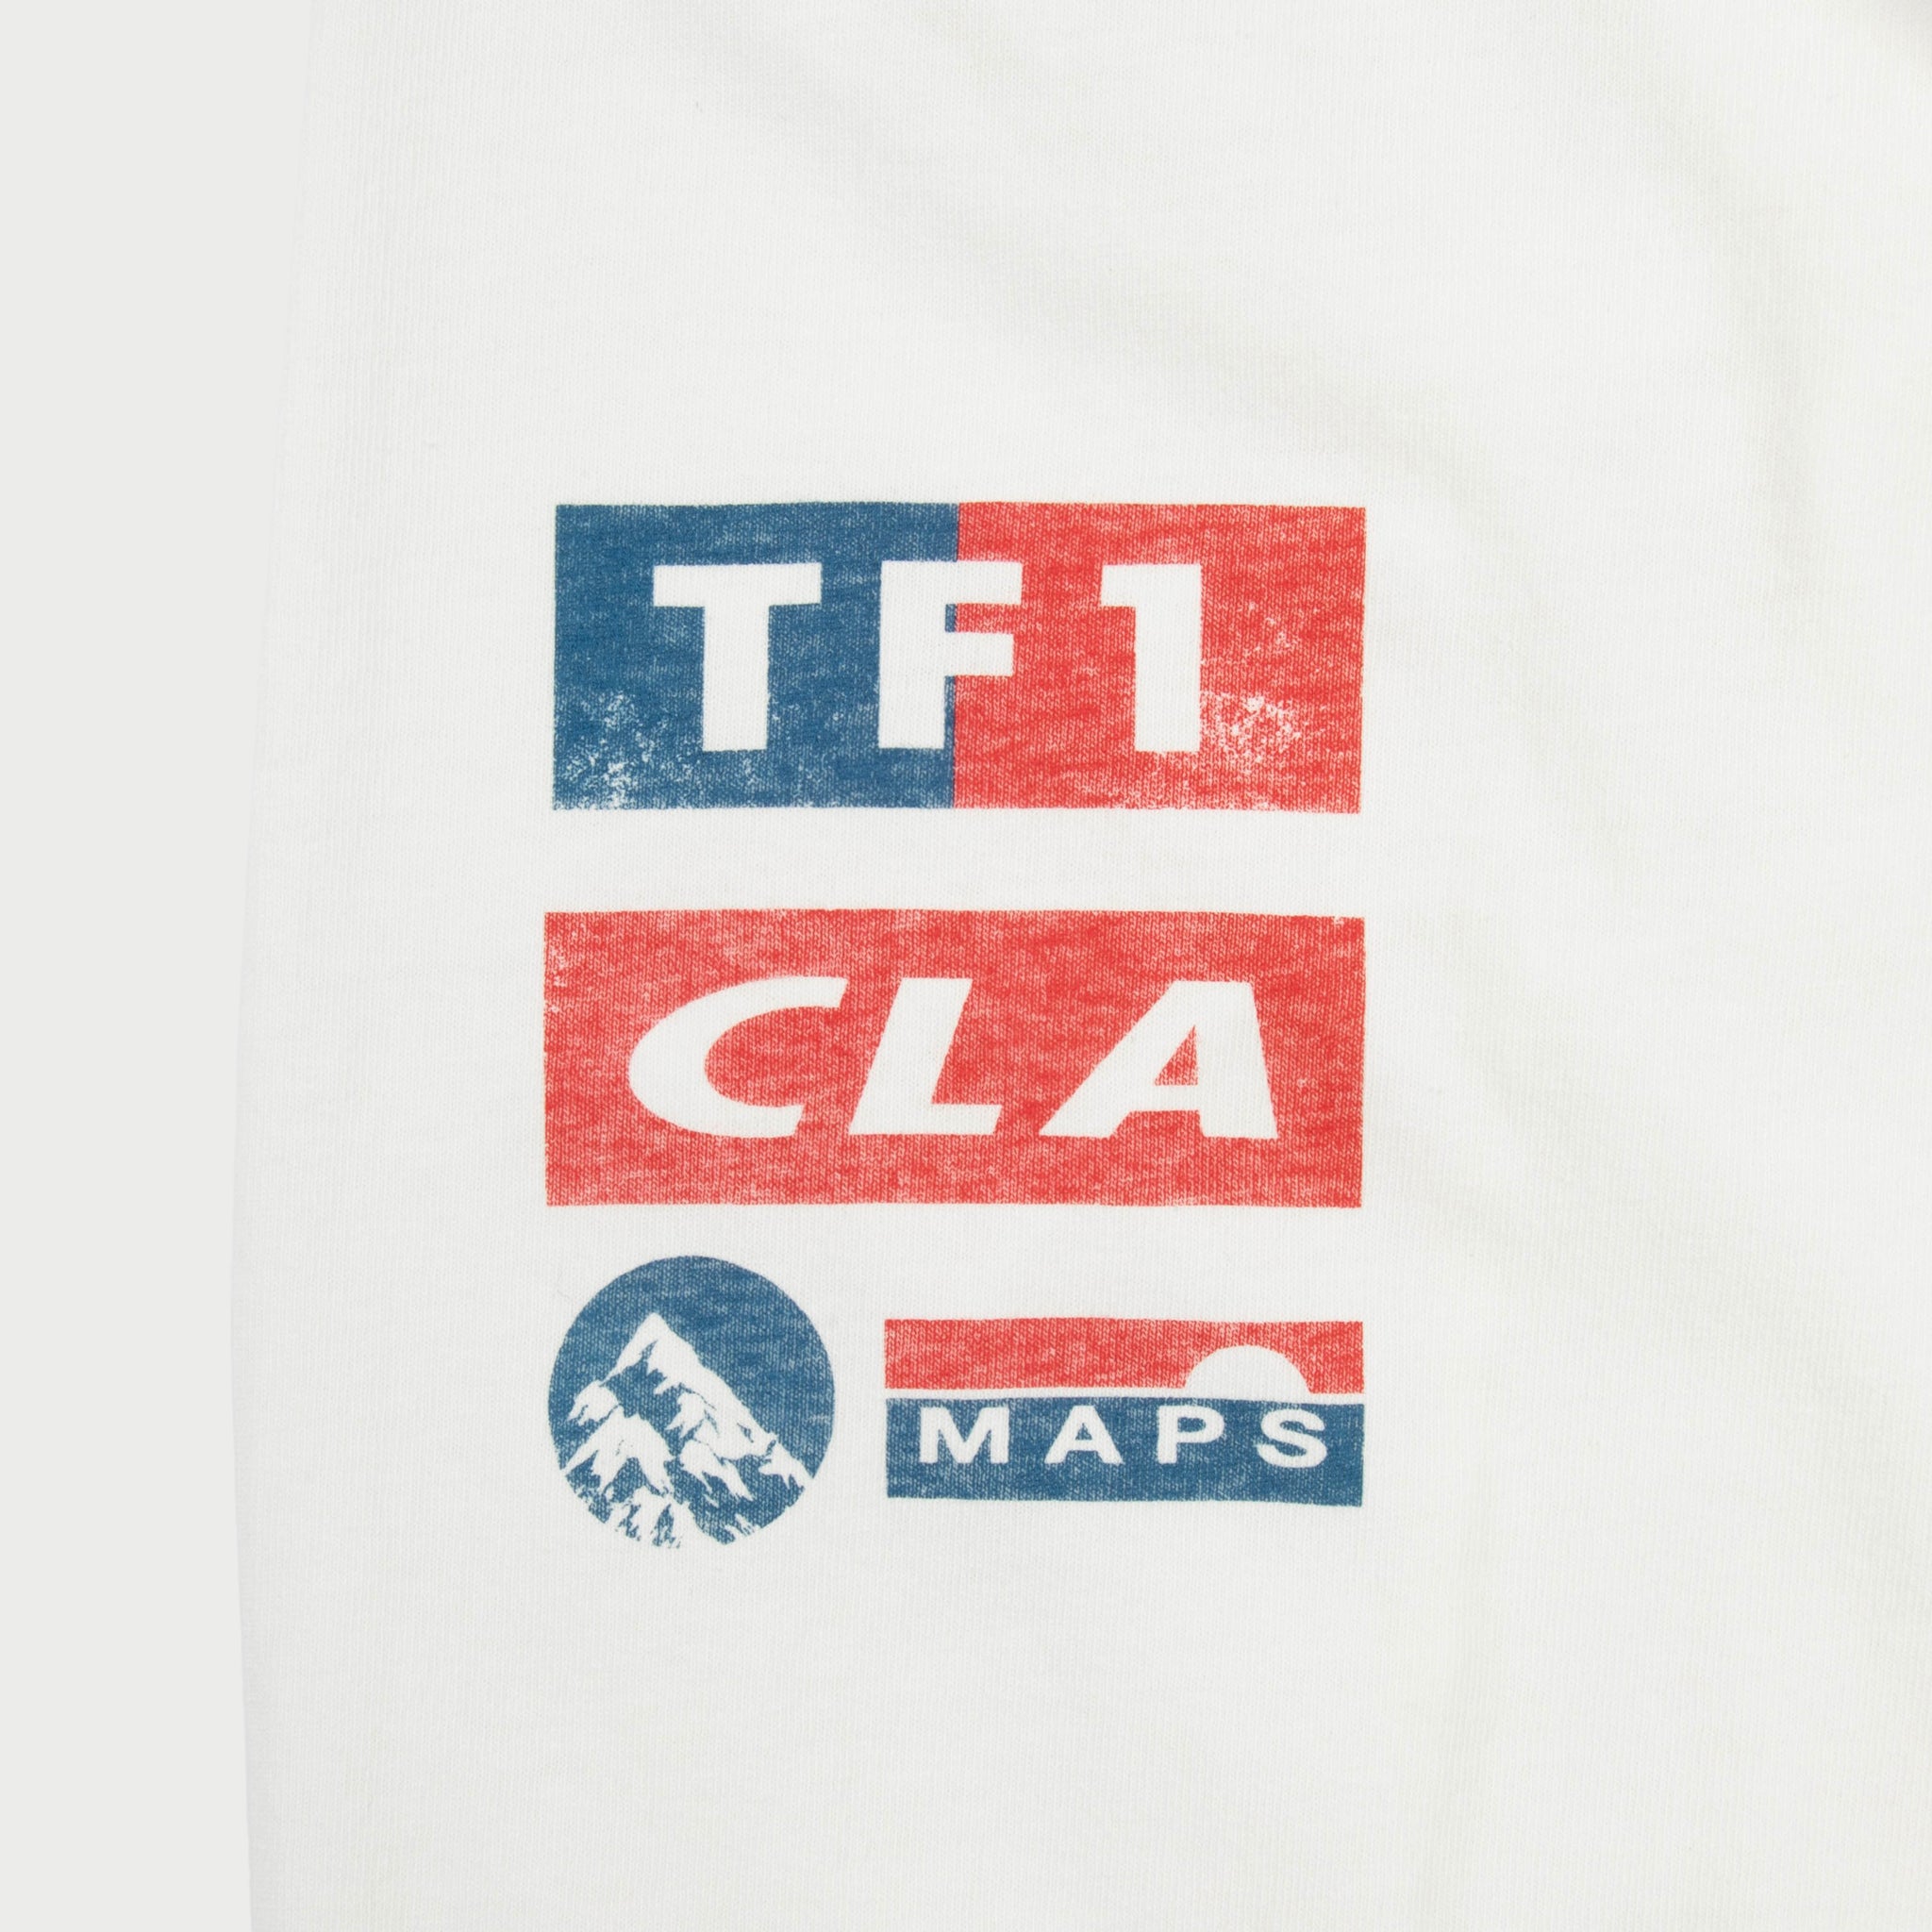 Adventure Team L/S T-Shirt (White)